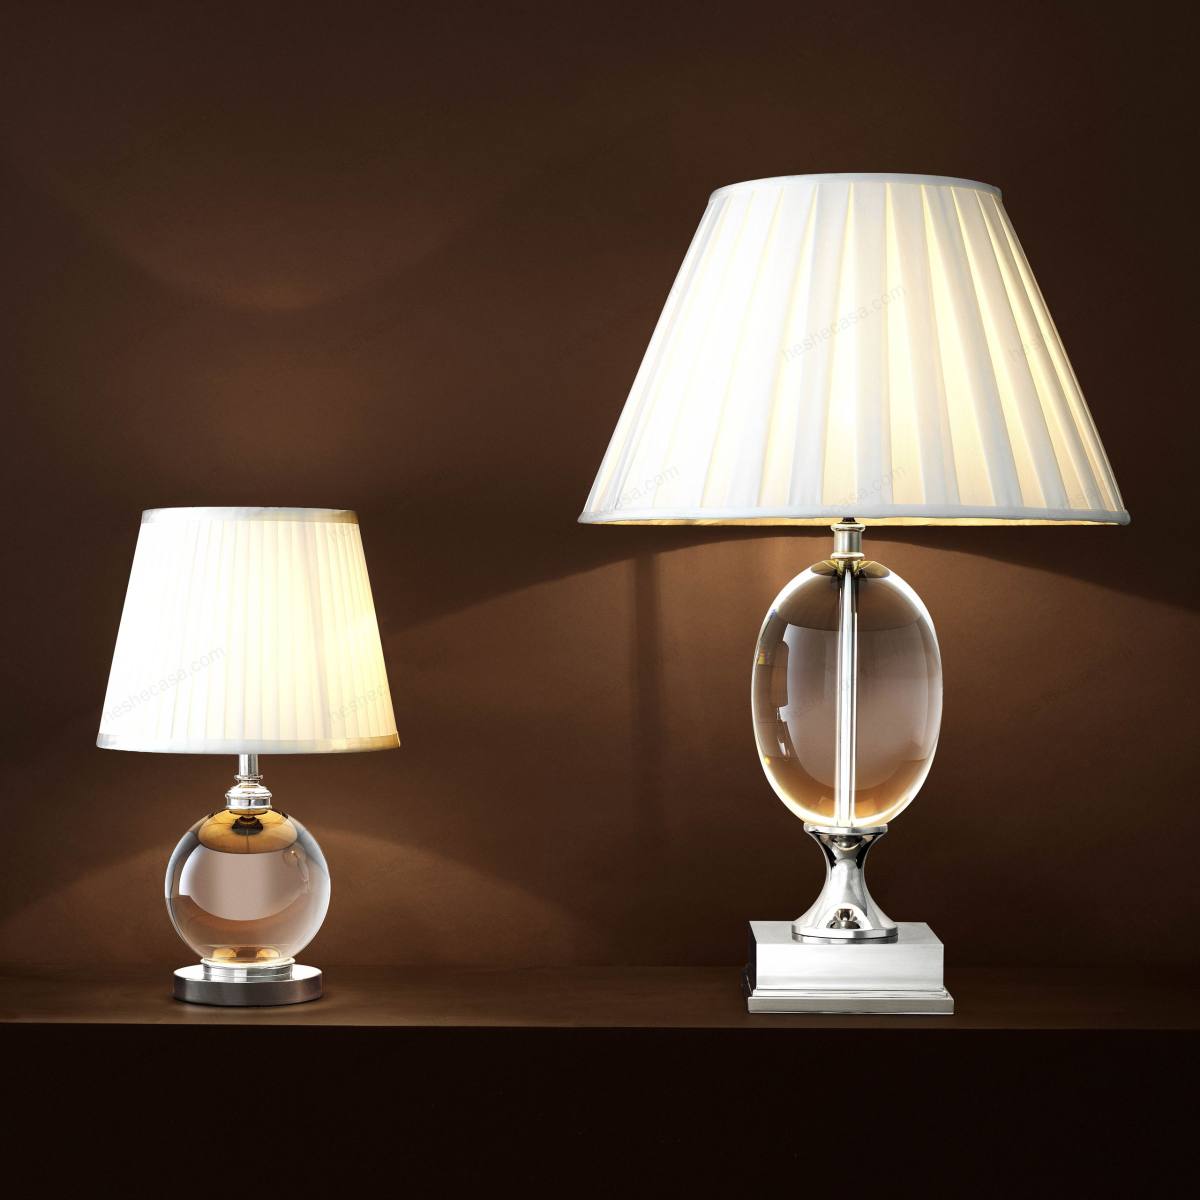 Table Lamp Galvin台灯